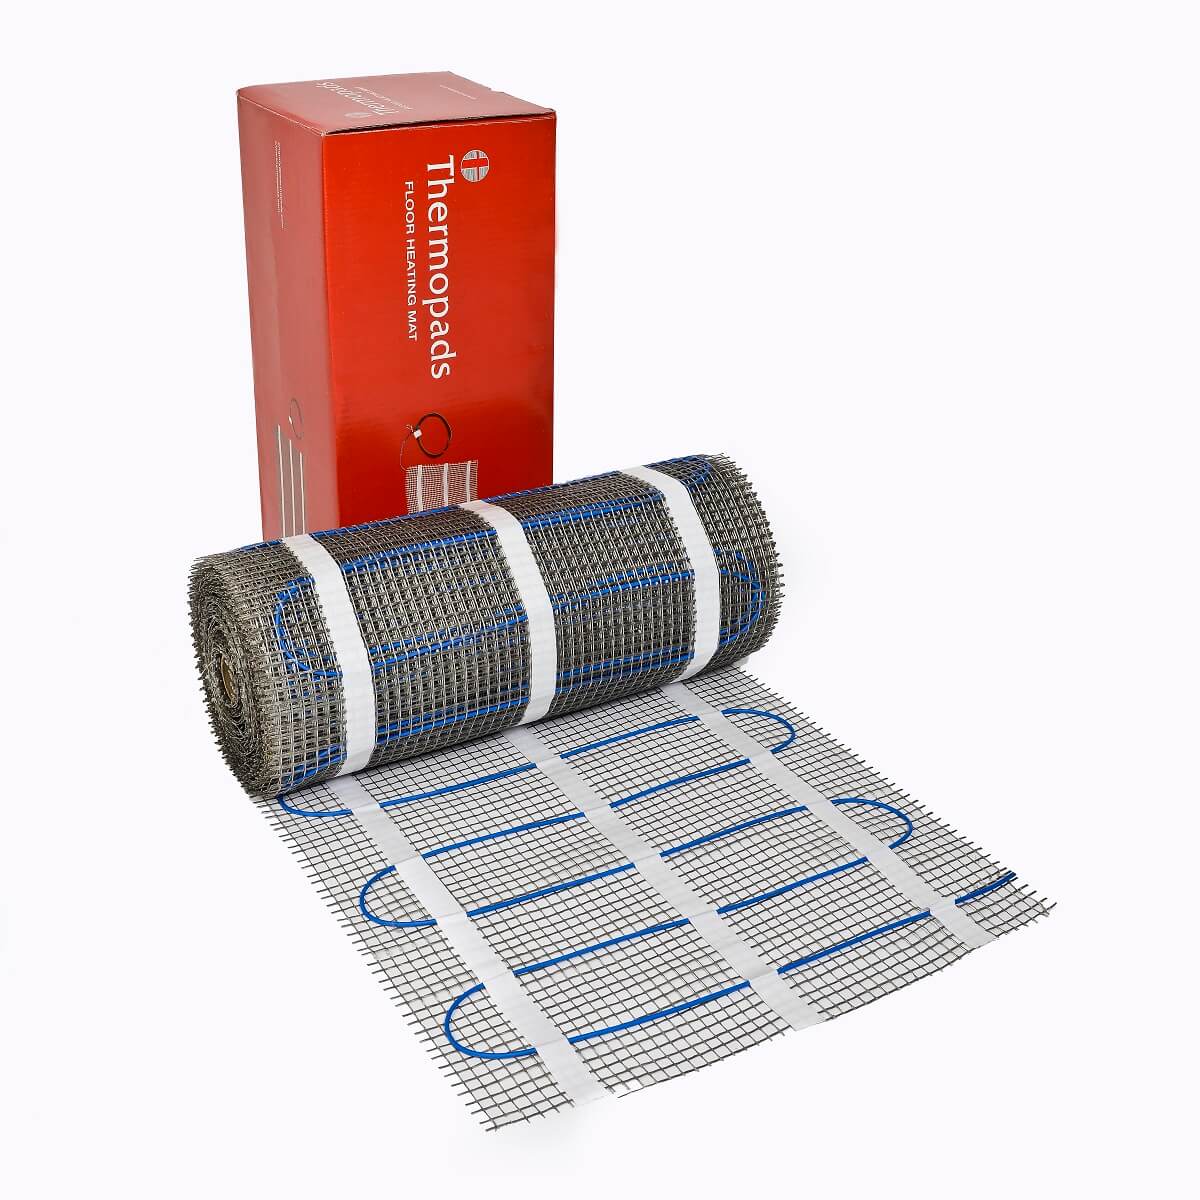 Thermopads Undertile Heating Mat - 3.5m2 700W (11176)